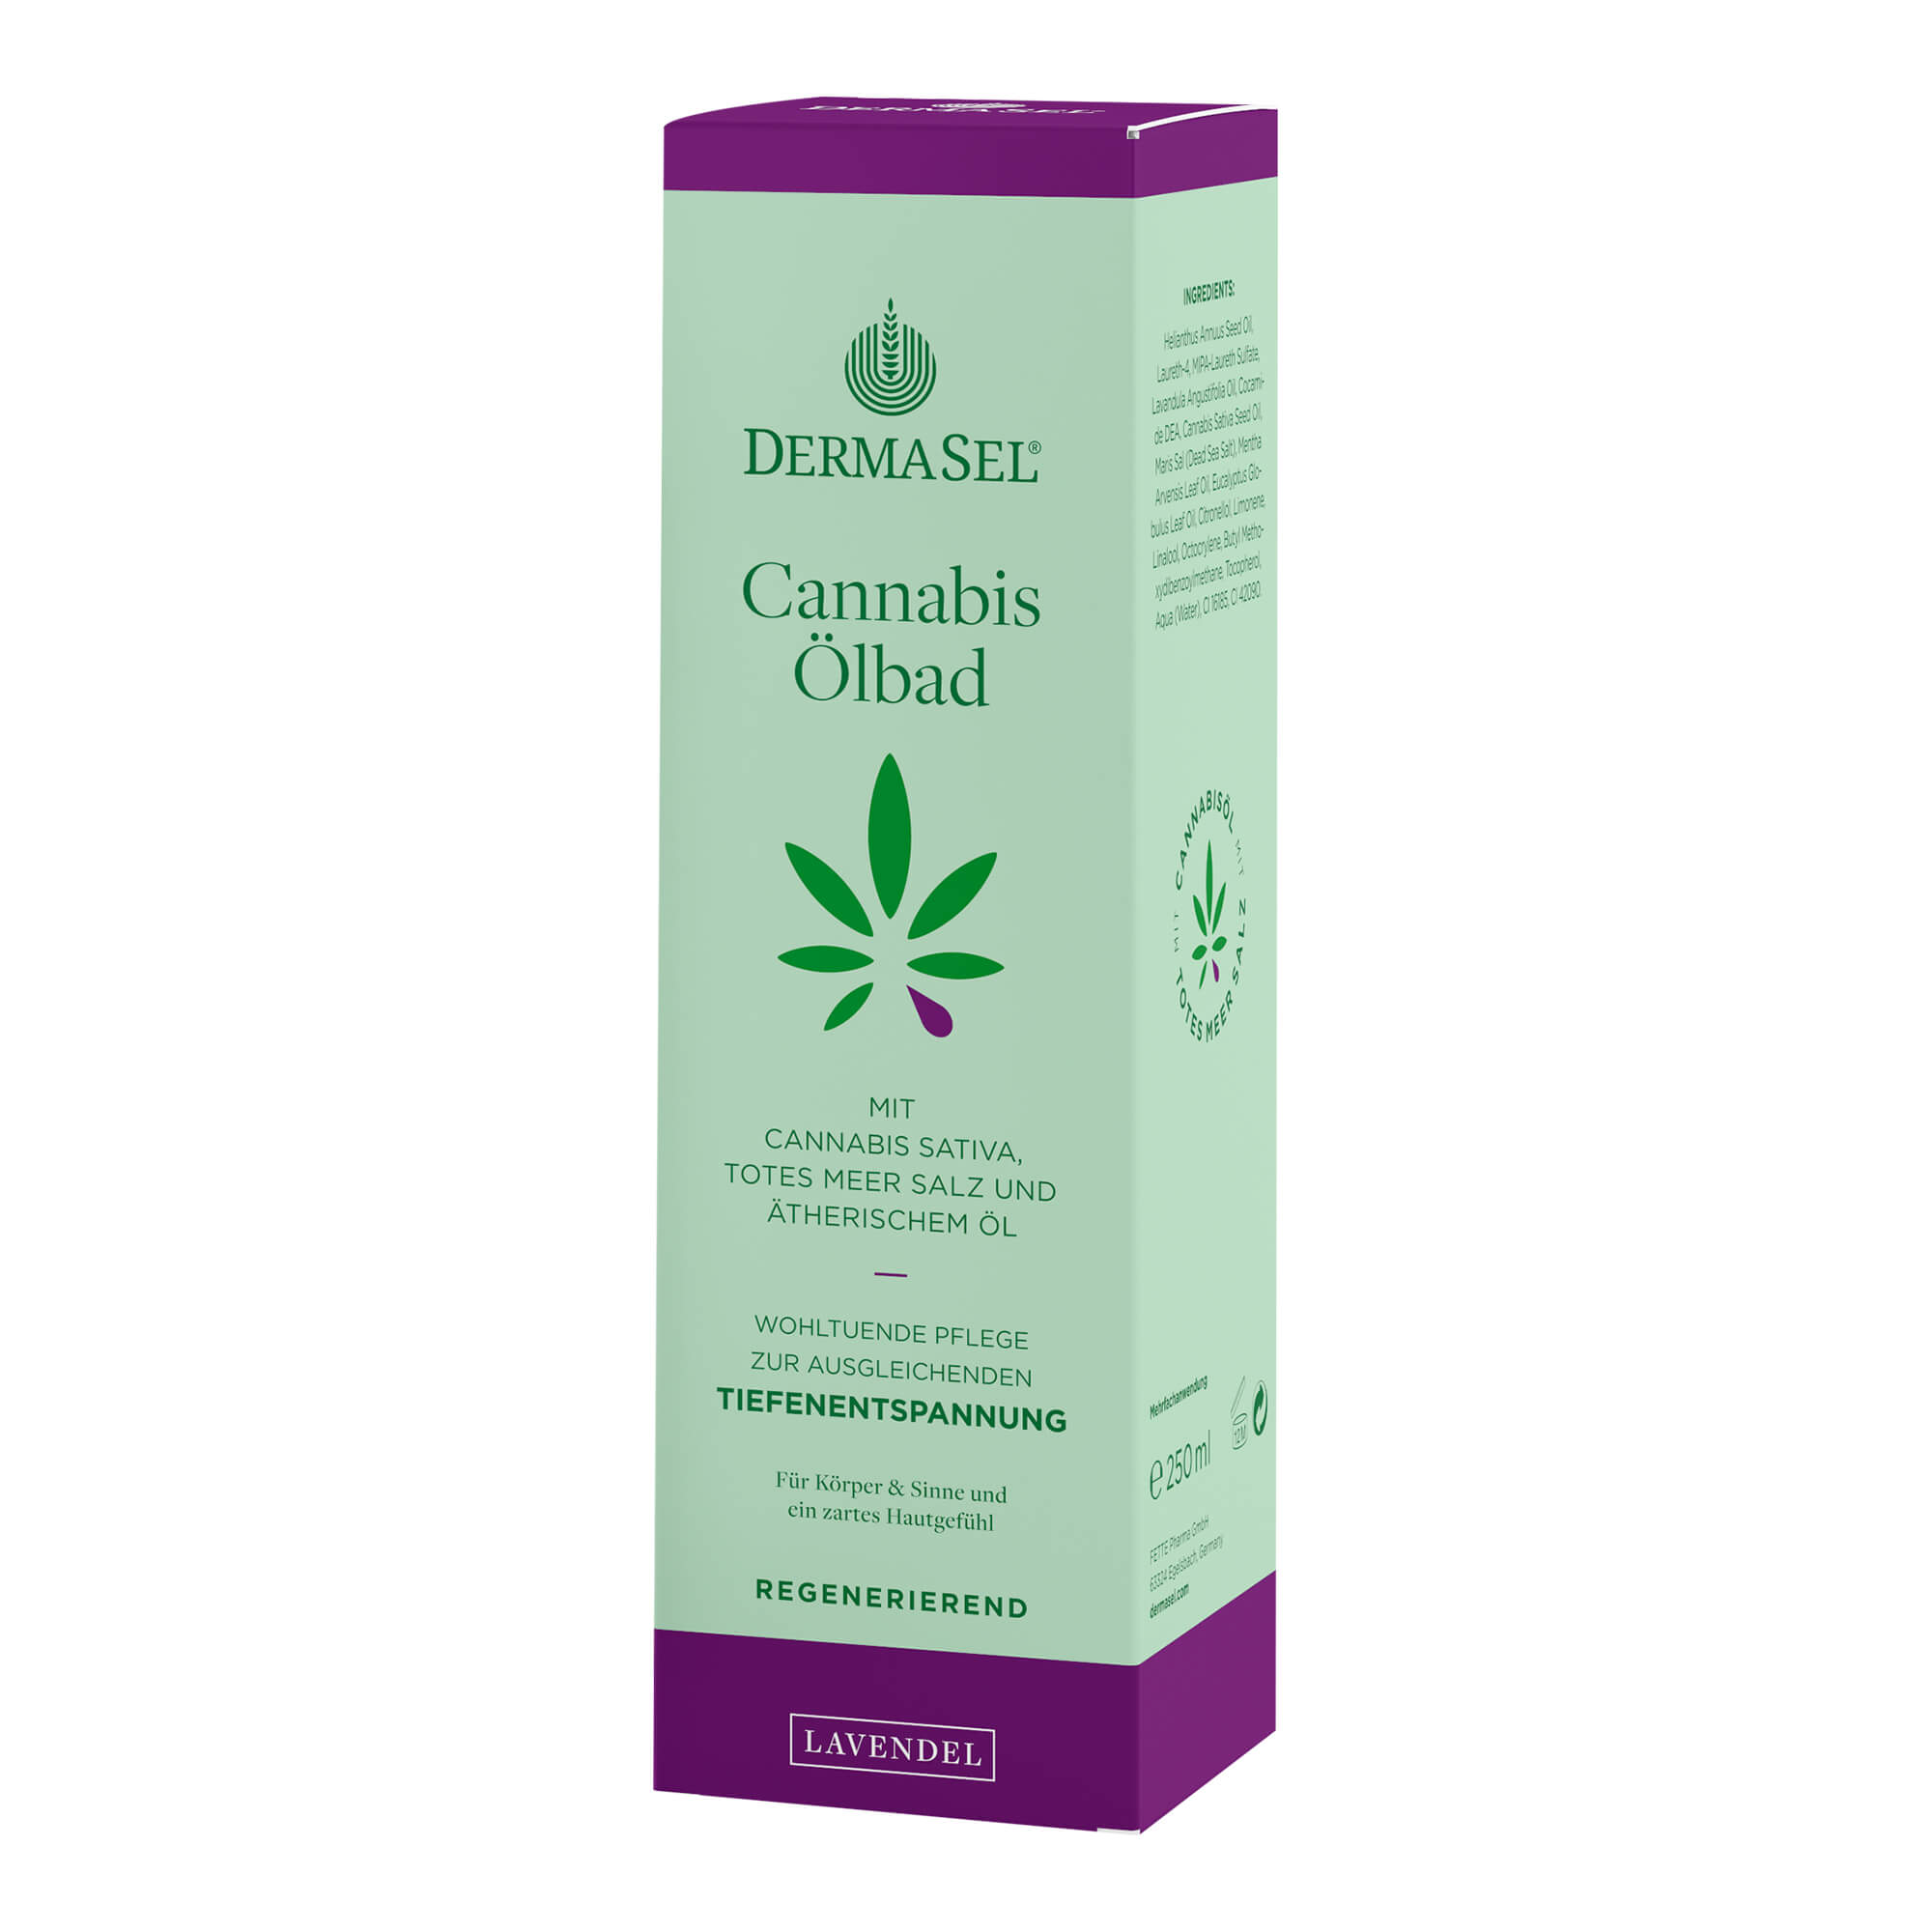 DermaSel Cannabis Ölbad Lavendel